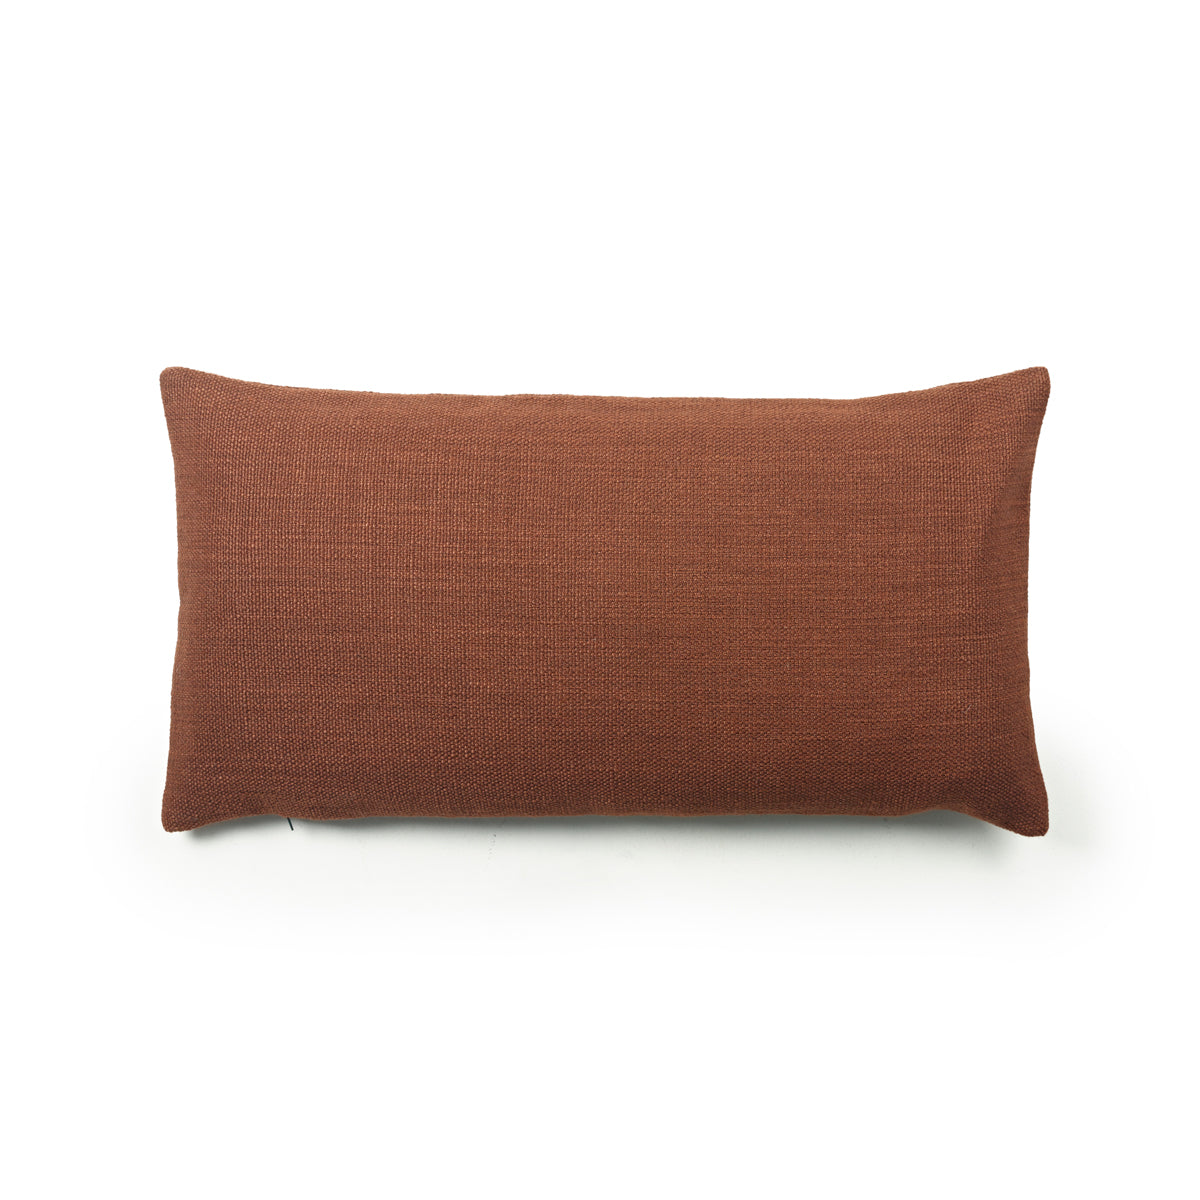 oblong linen and wool pillow in burnet sienna